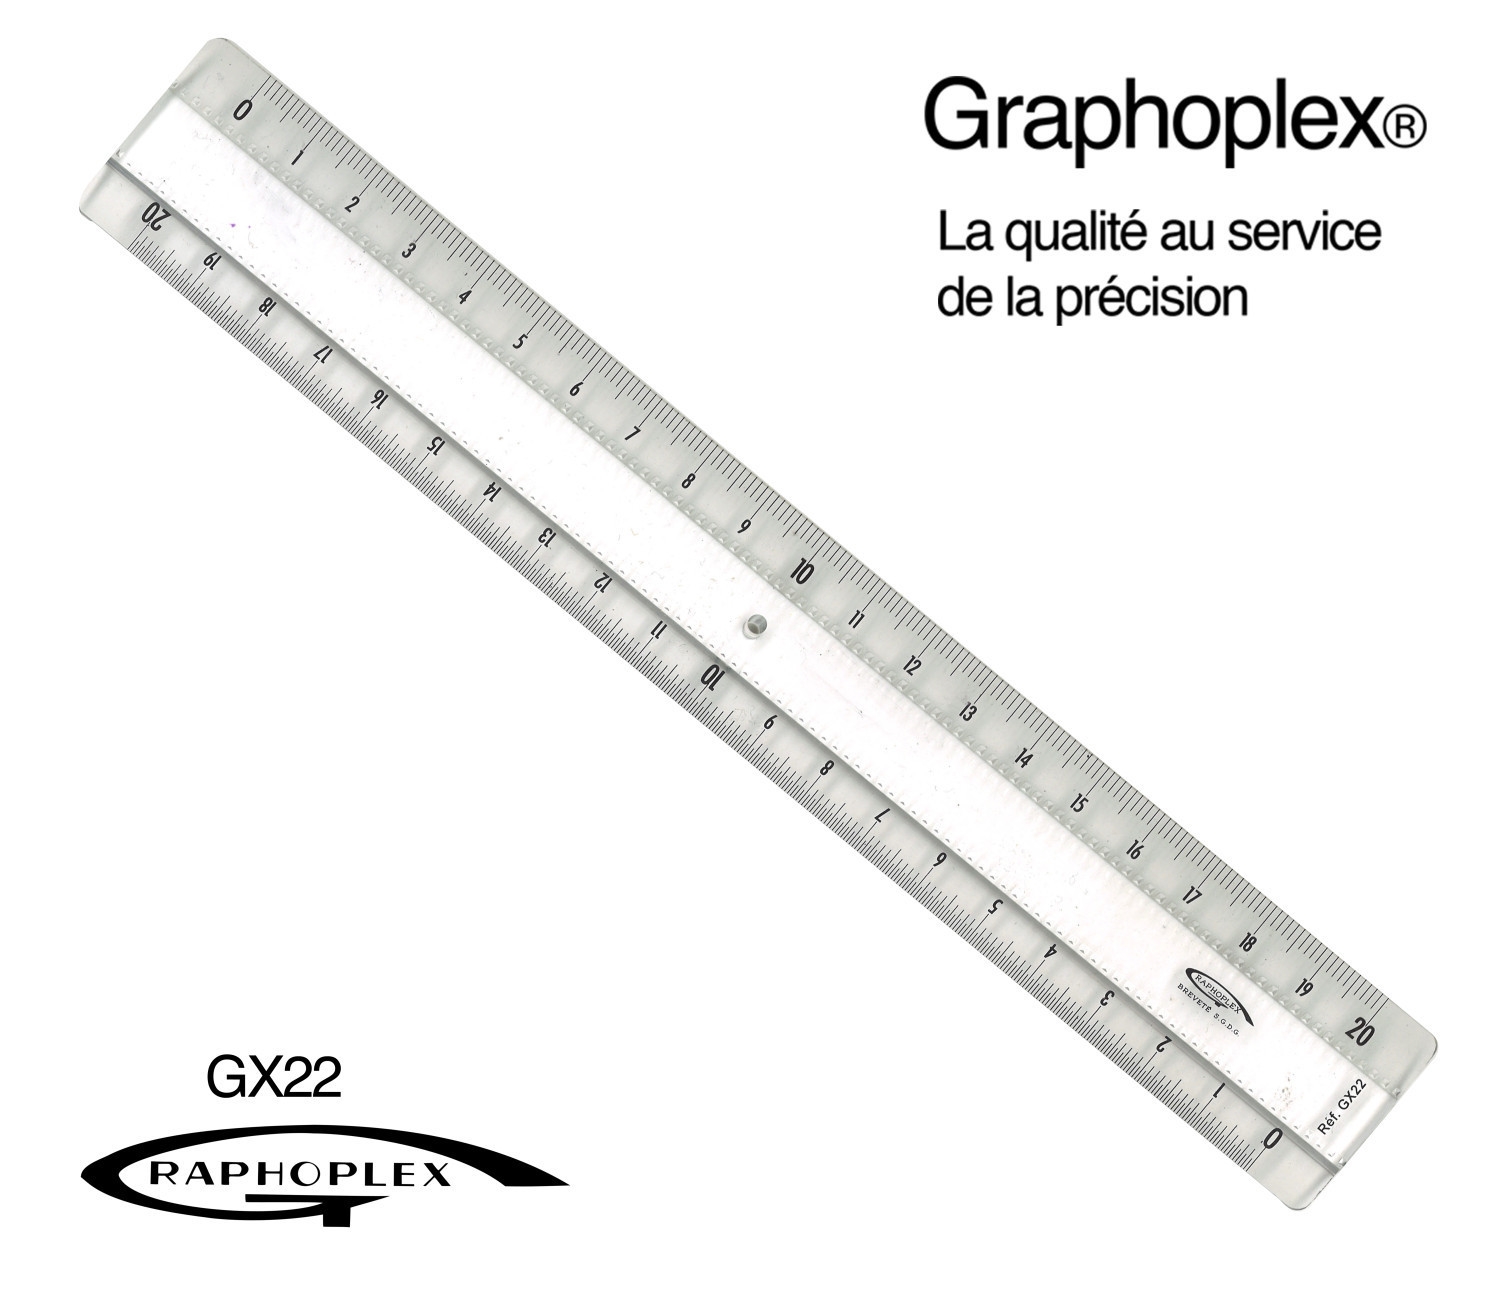 Règle transparente 2 biseaux + bosselage 20 cm - Graphoplex ref GX22